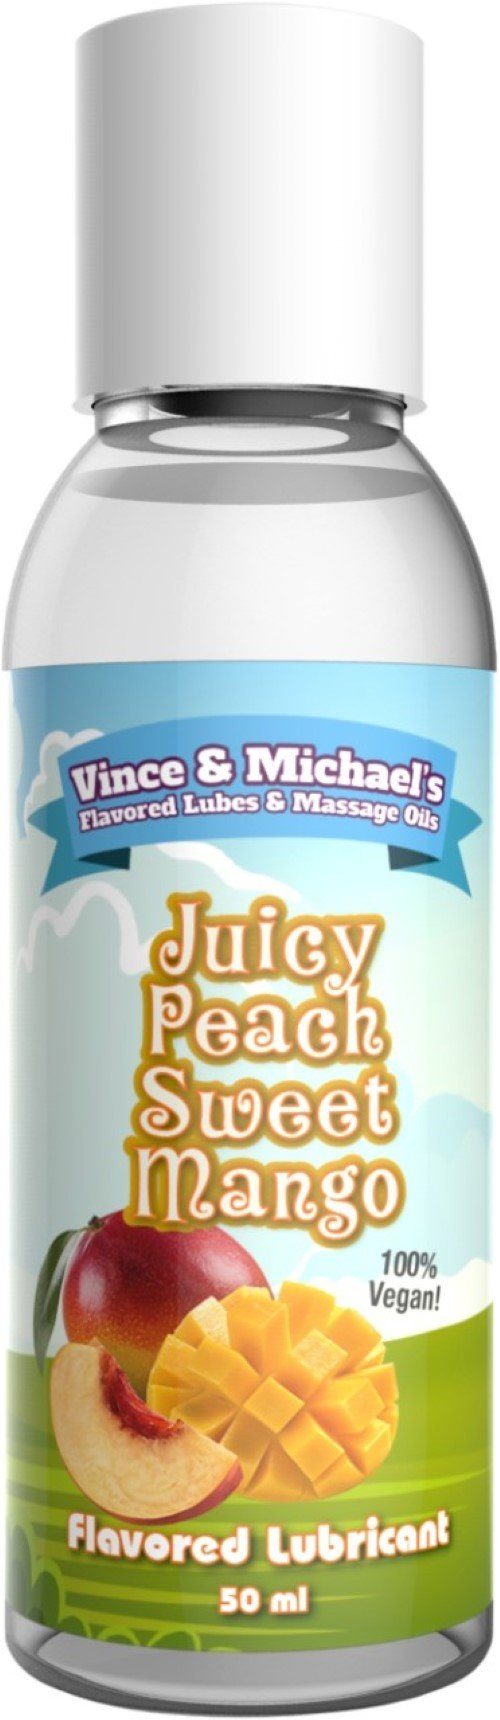 VINCE Michael´s Gleitgel Sweet Juicy ml & - Mango MICHAEL's & Vince Peach 50 50ml